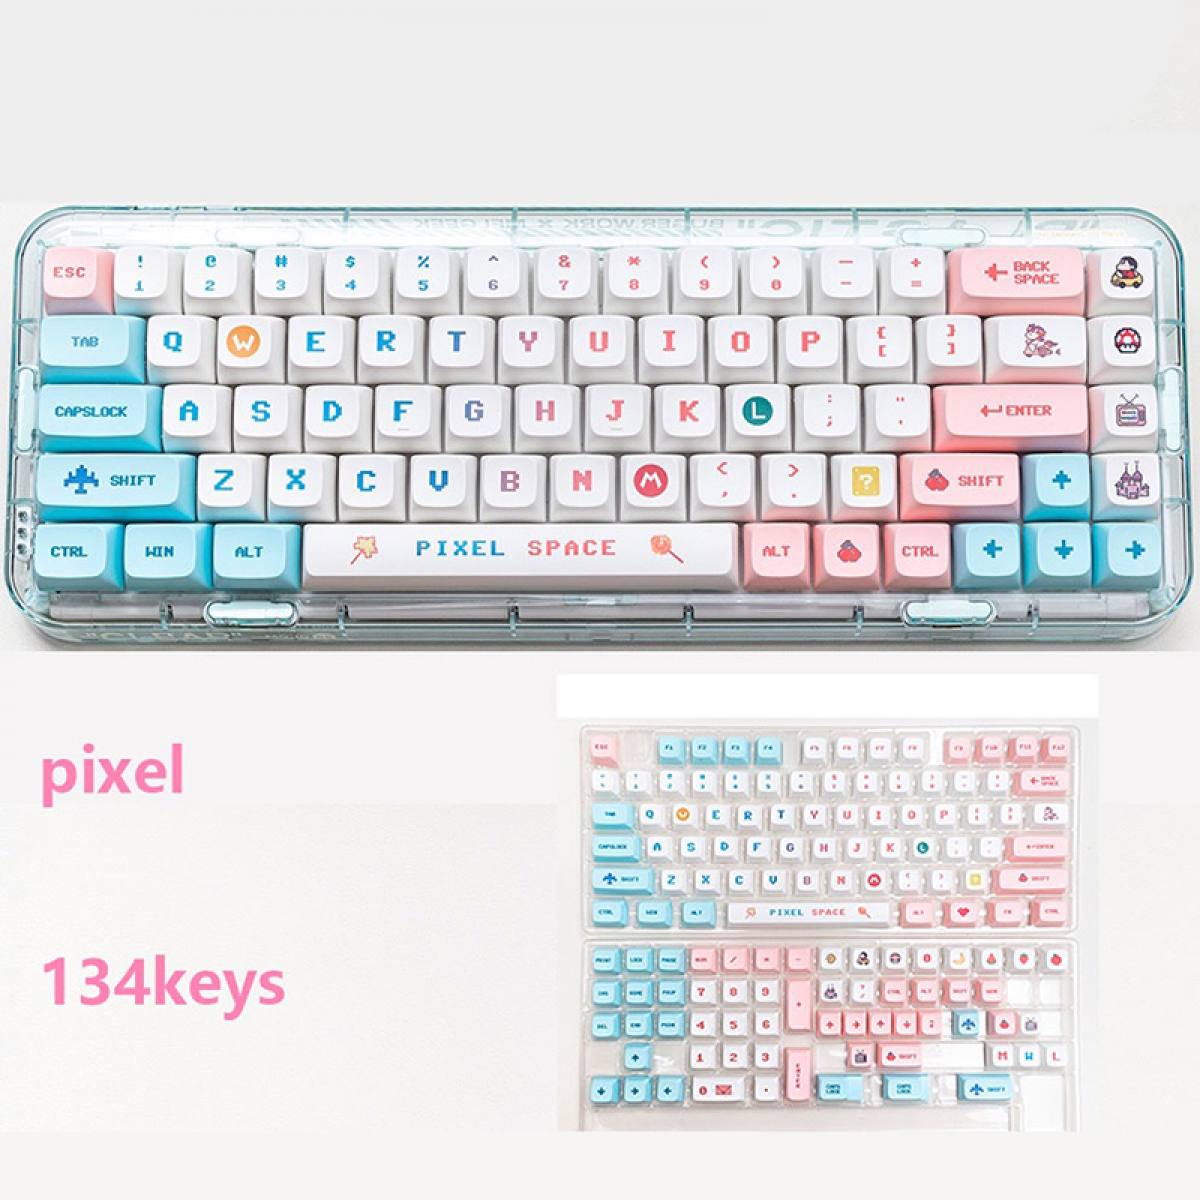 Set keycap Pixel | XDA profile - PBT Dye-Sub - 134 keys